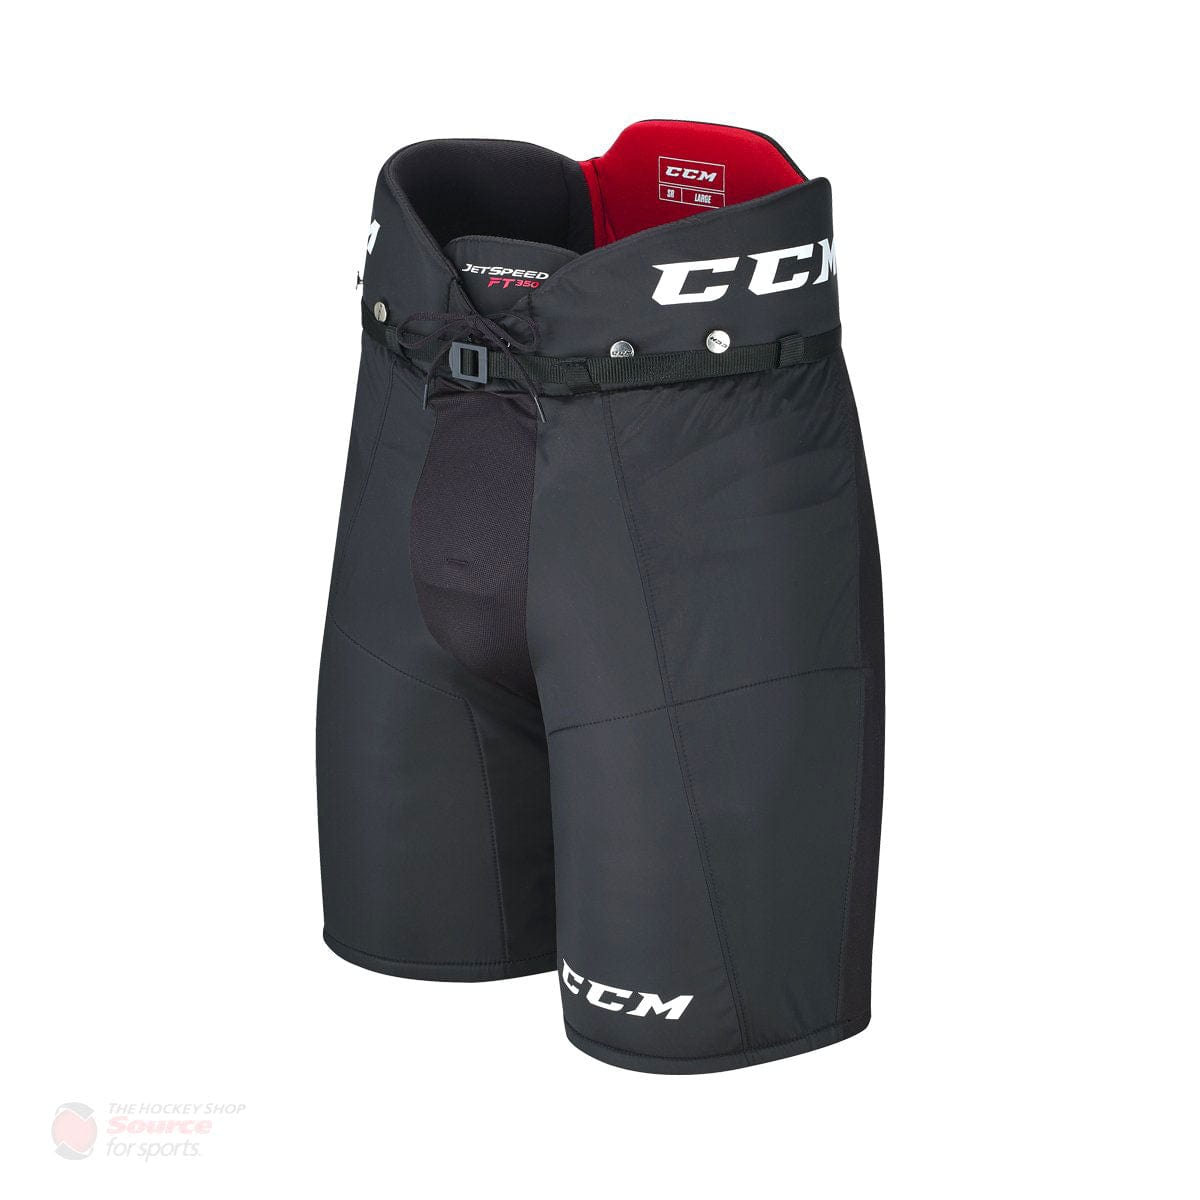 CCM Jetspeed FT350 Senior Hockey Pants